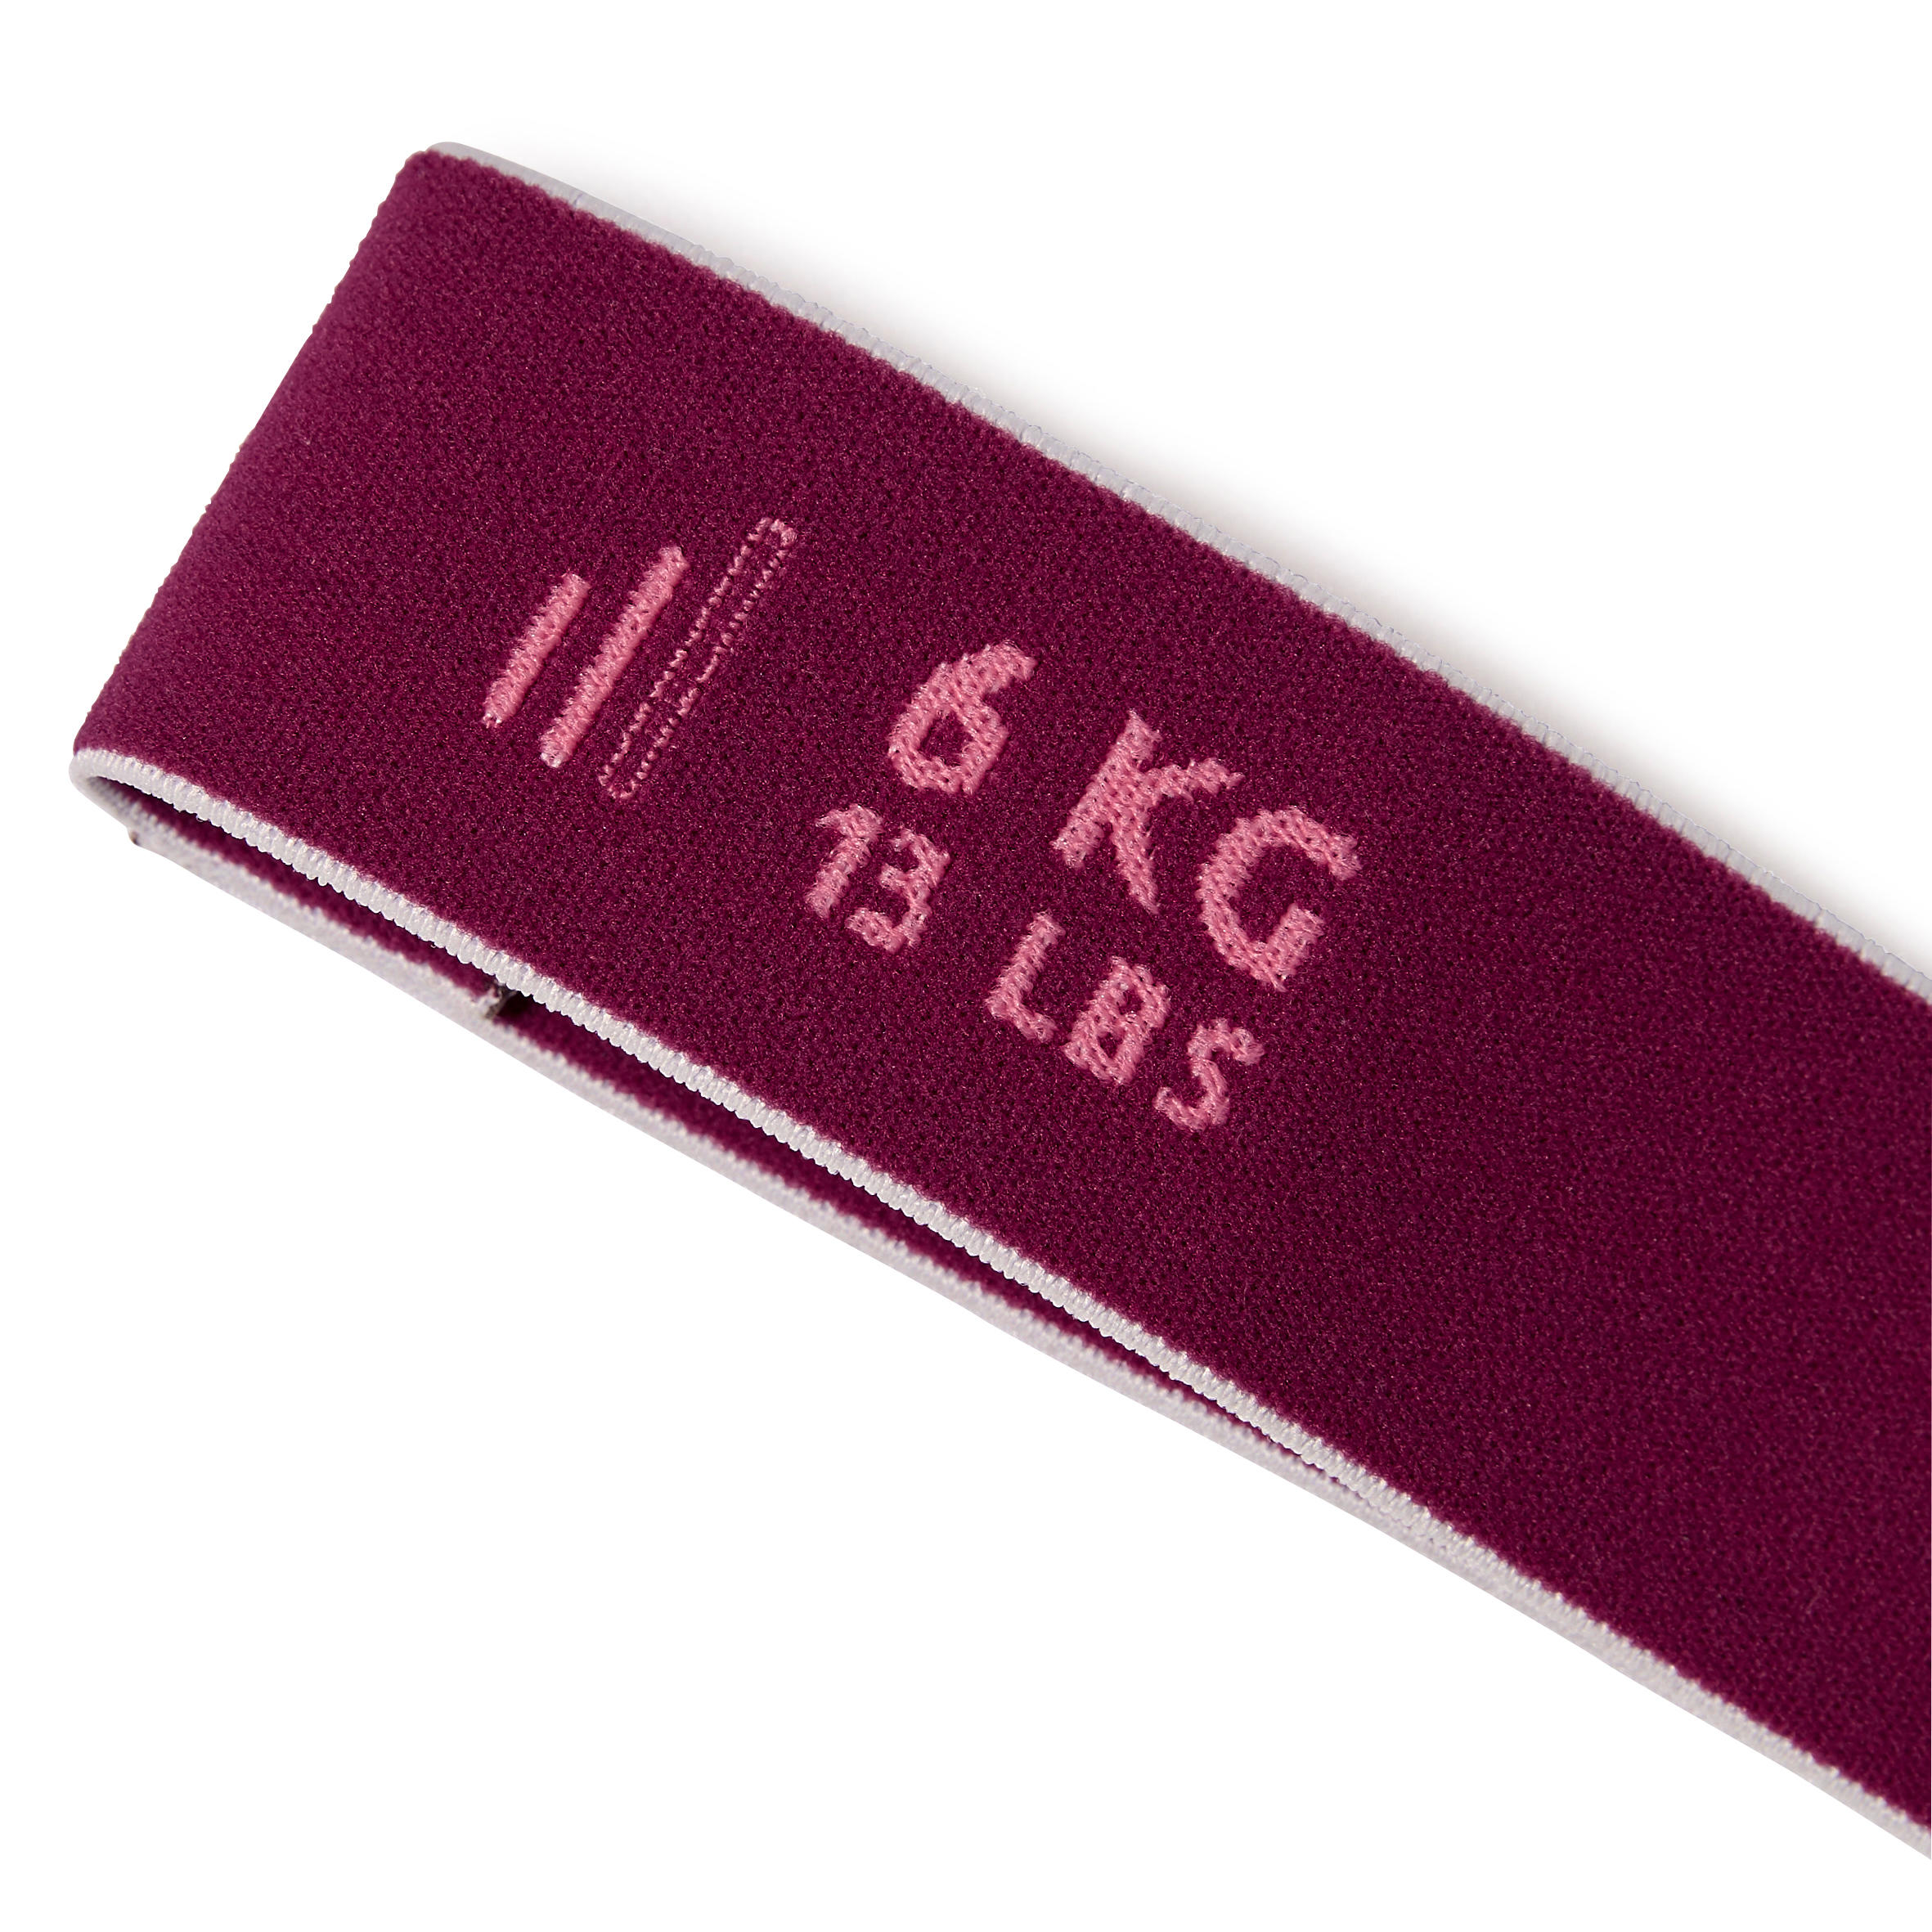 Fitness 6 kg Fabric Mini Resistance Band - Burgundy 2/3